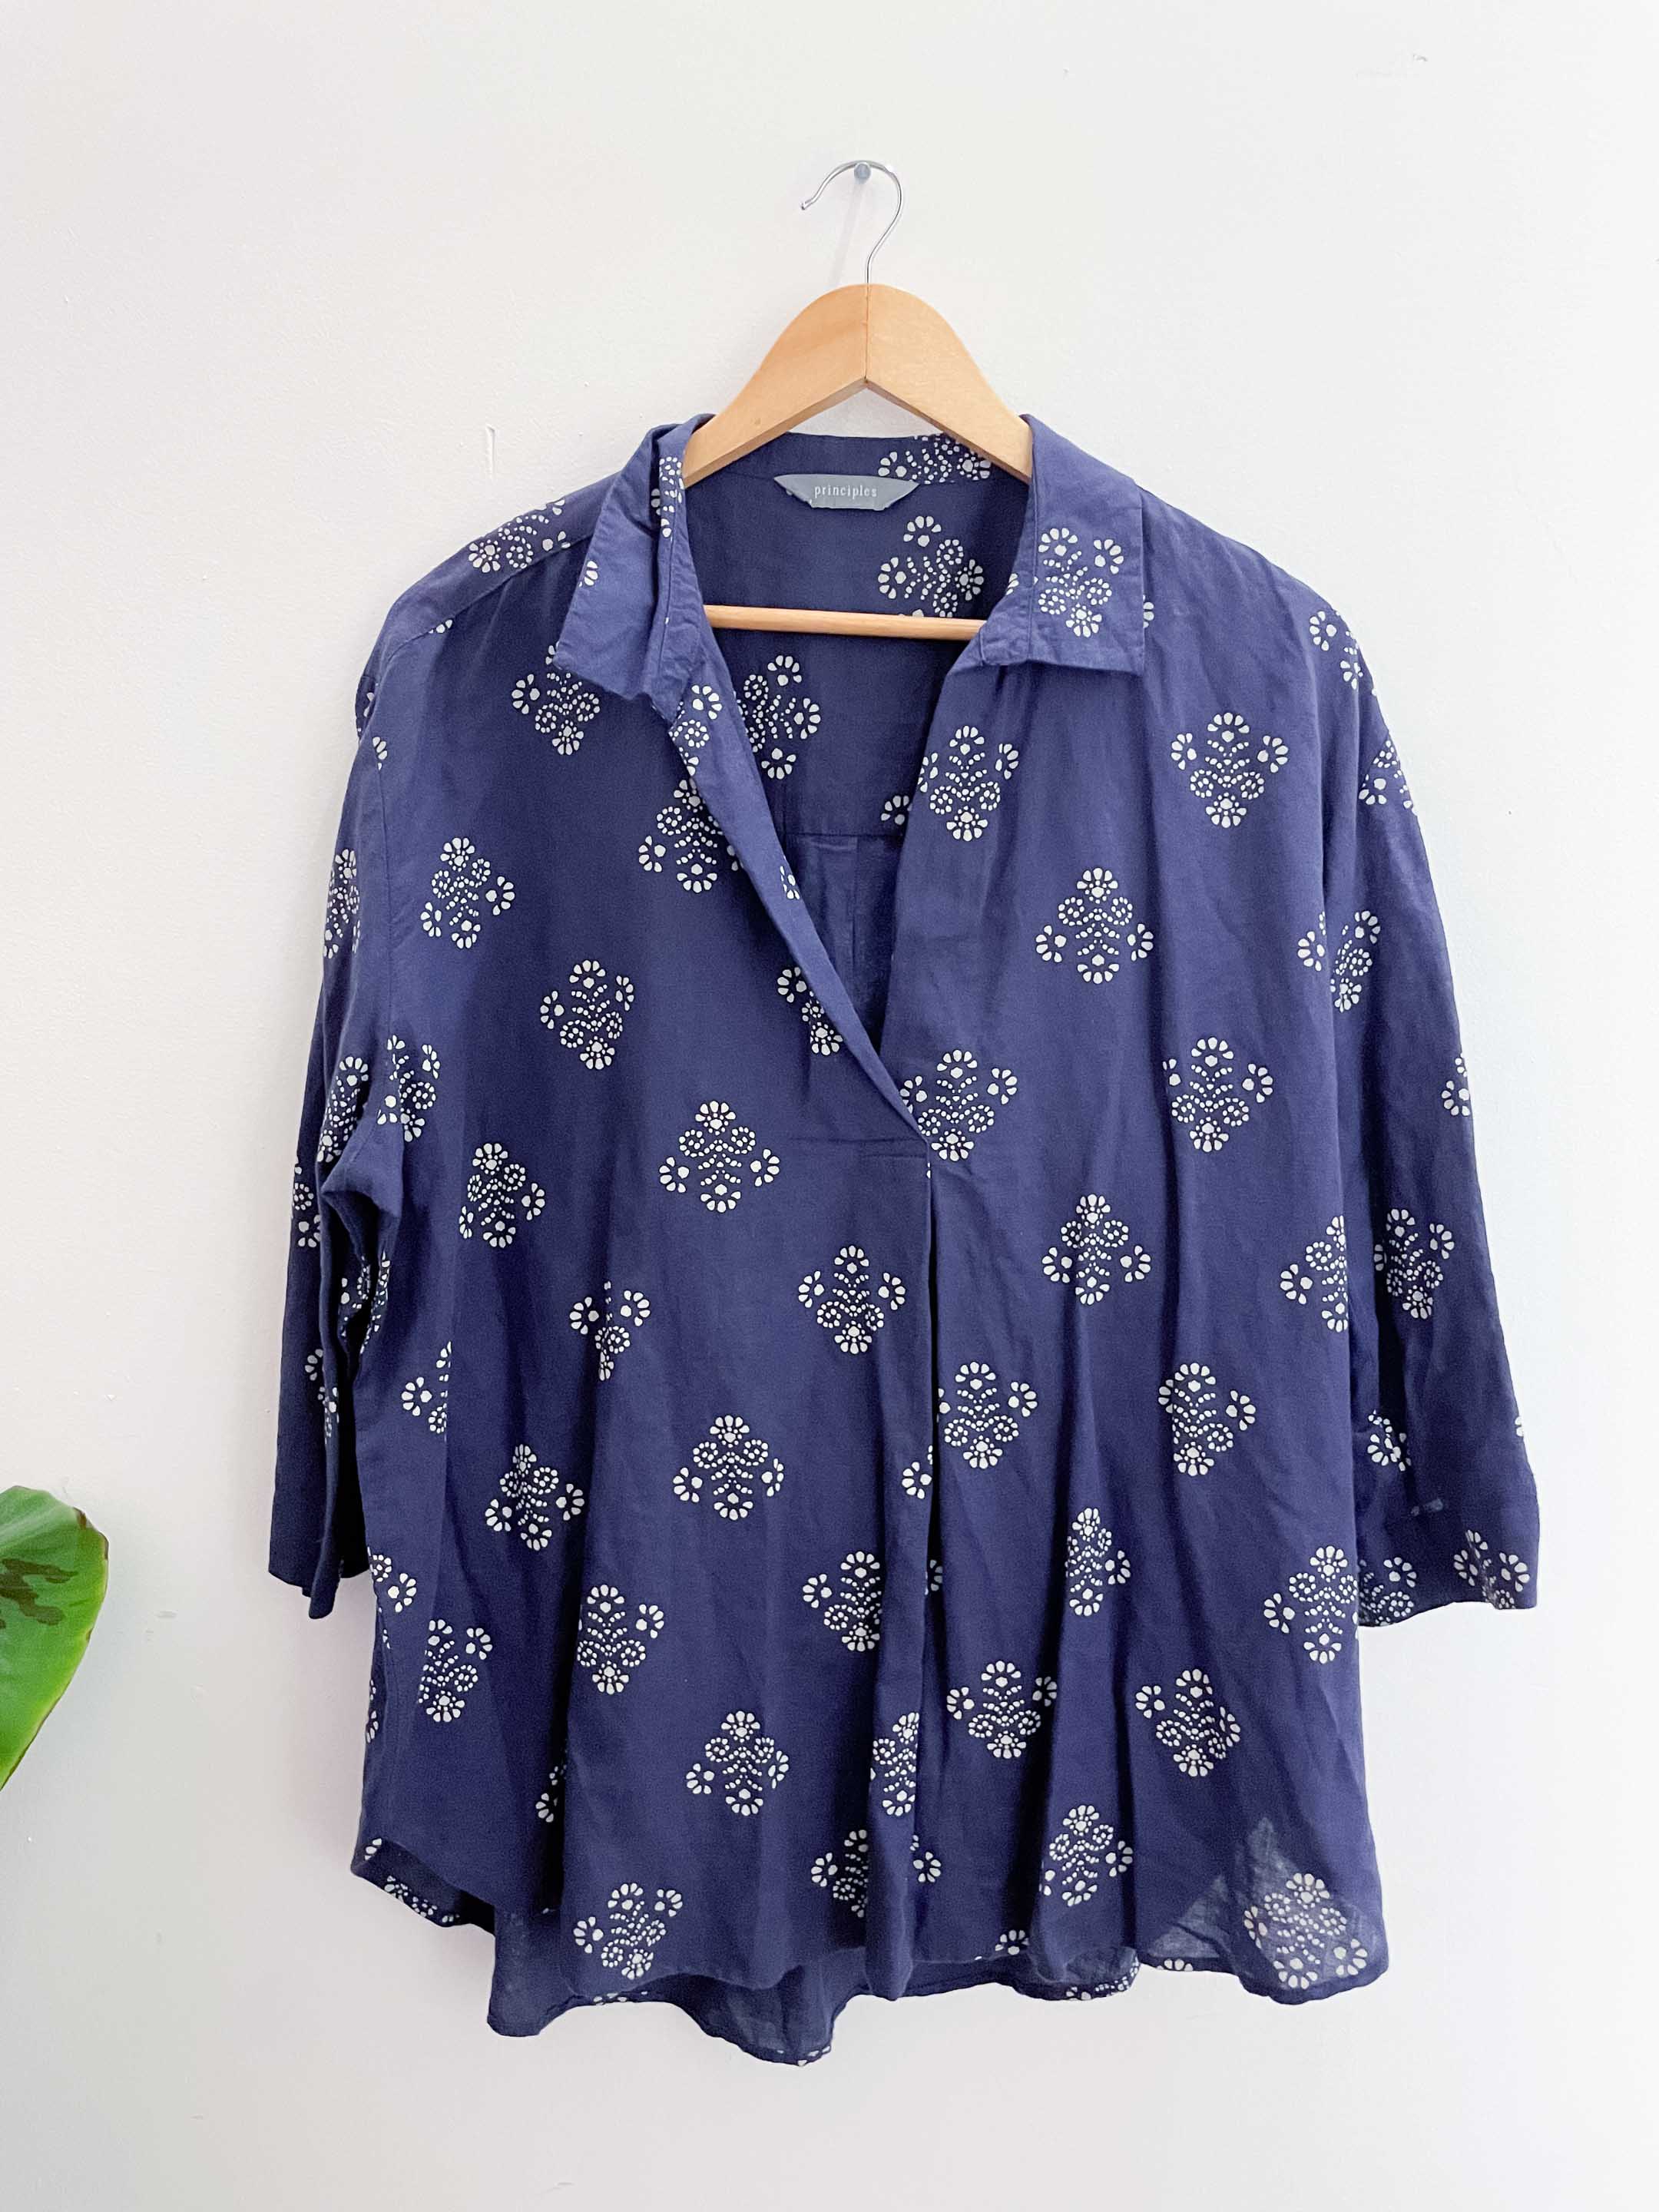 Vintage principles large purple patterned shirt